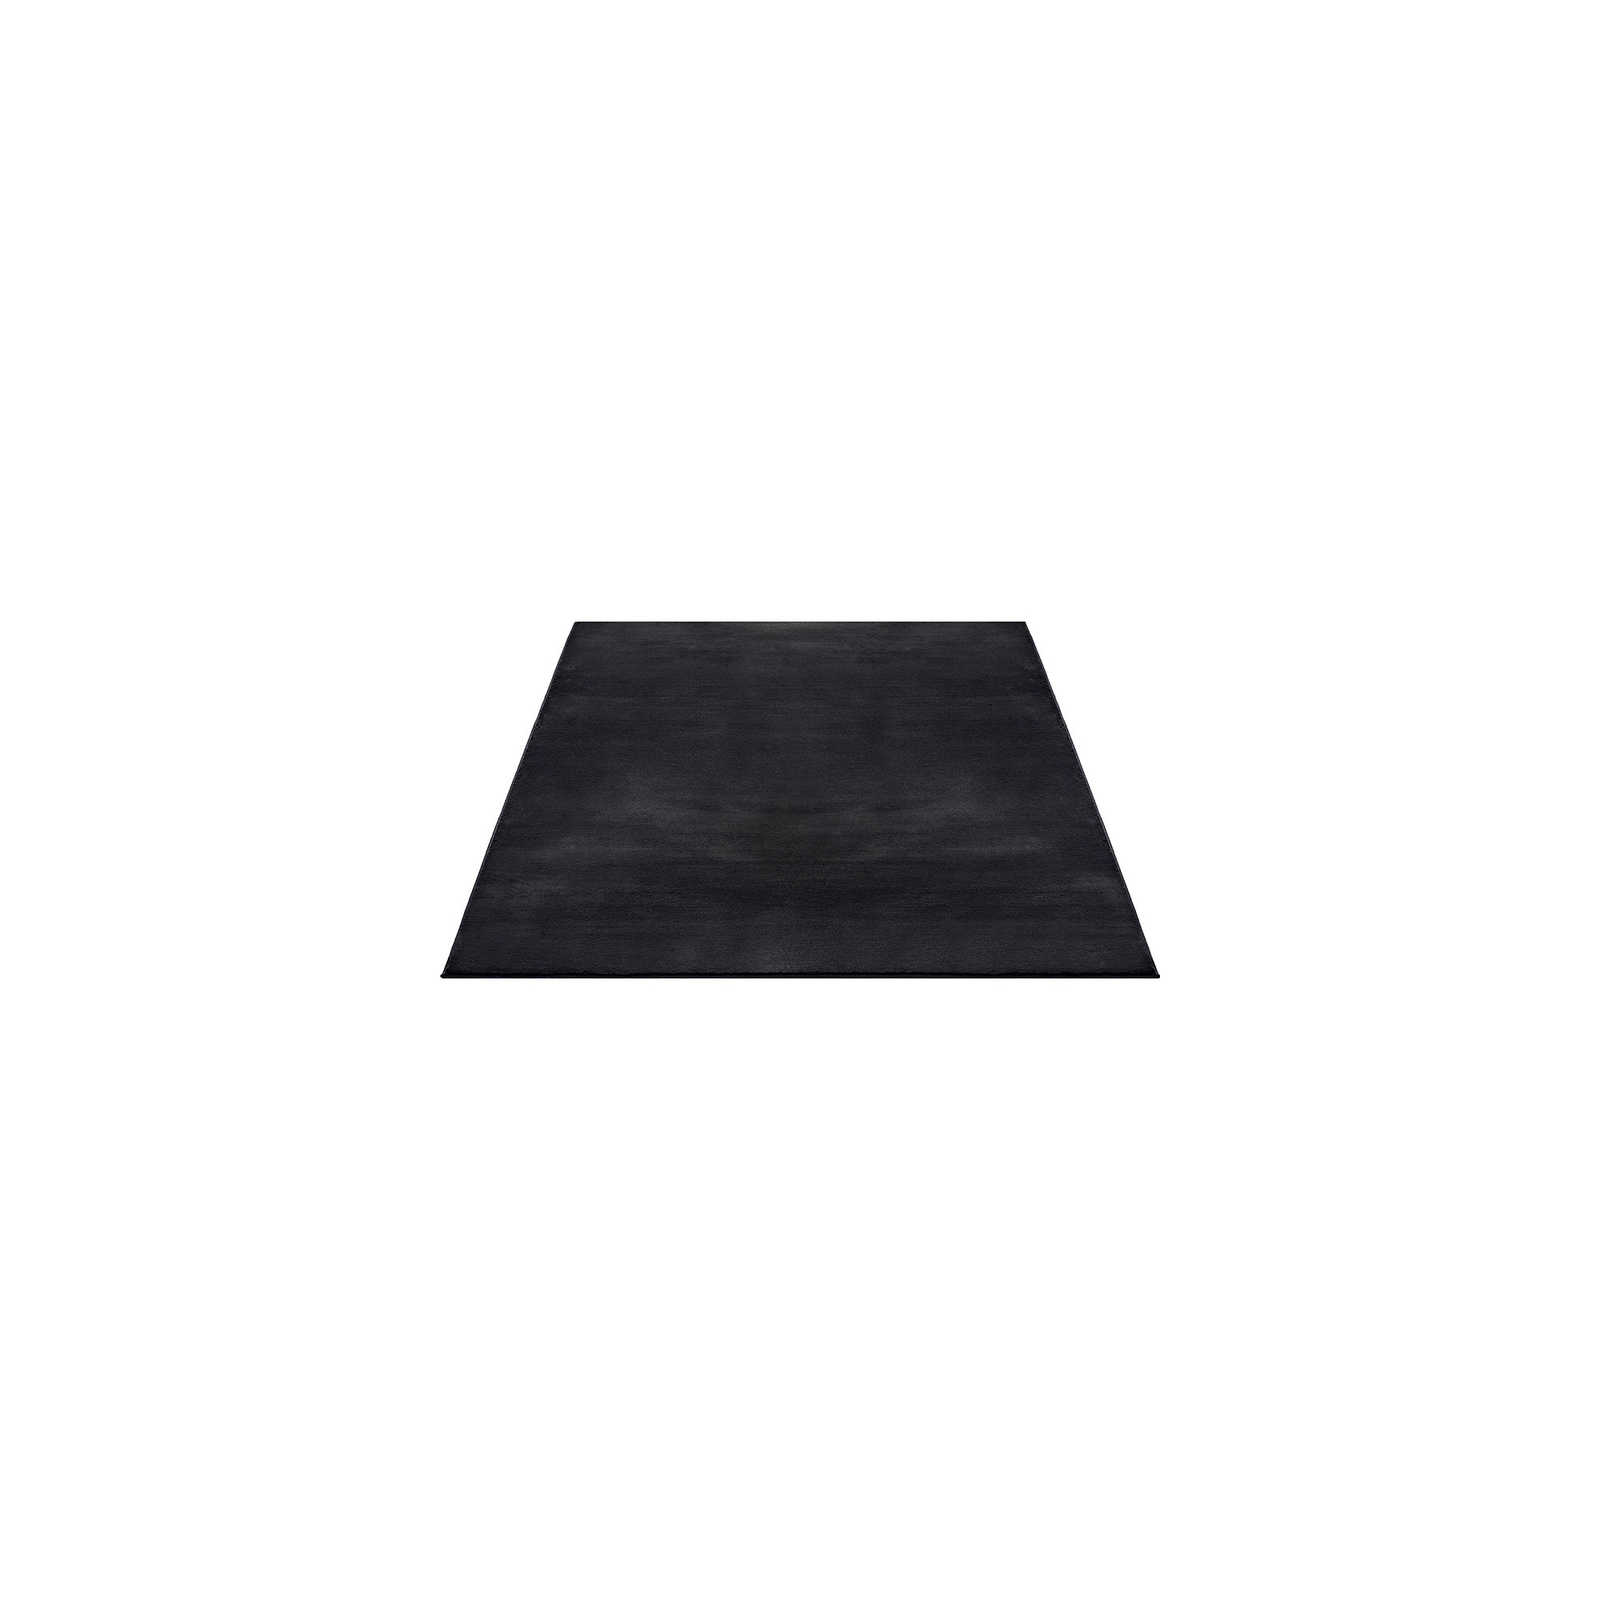 Knuffelzacht hoogpolig tapijt in zwart - 160 x 117 cm
